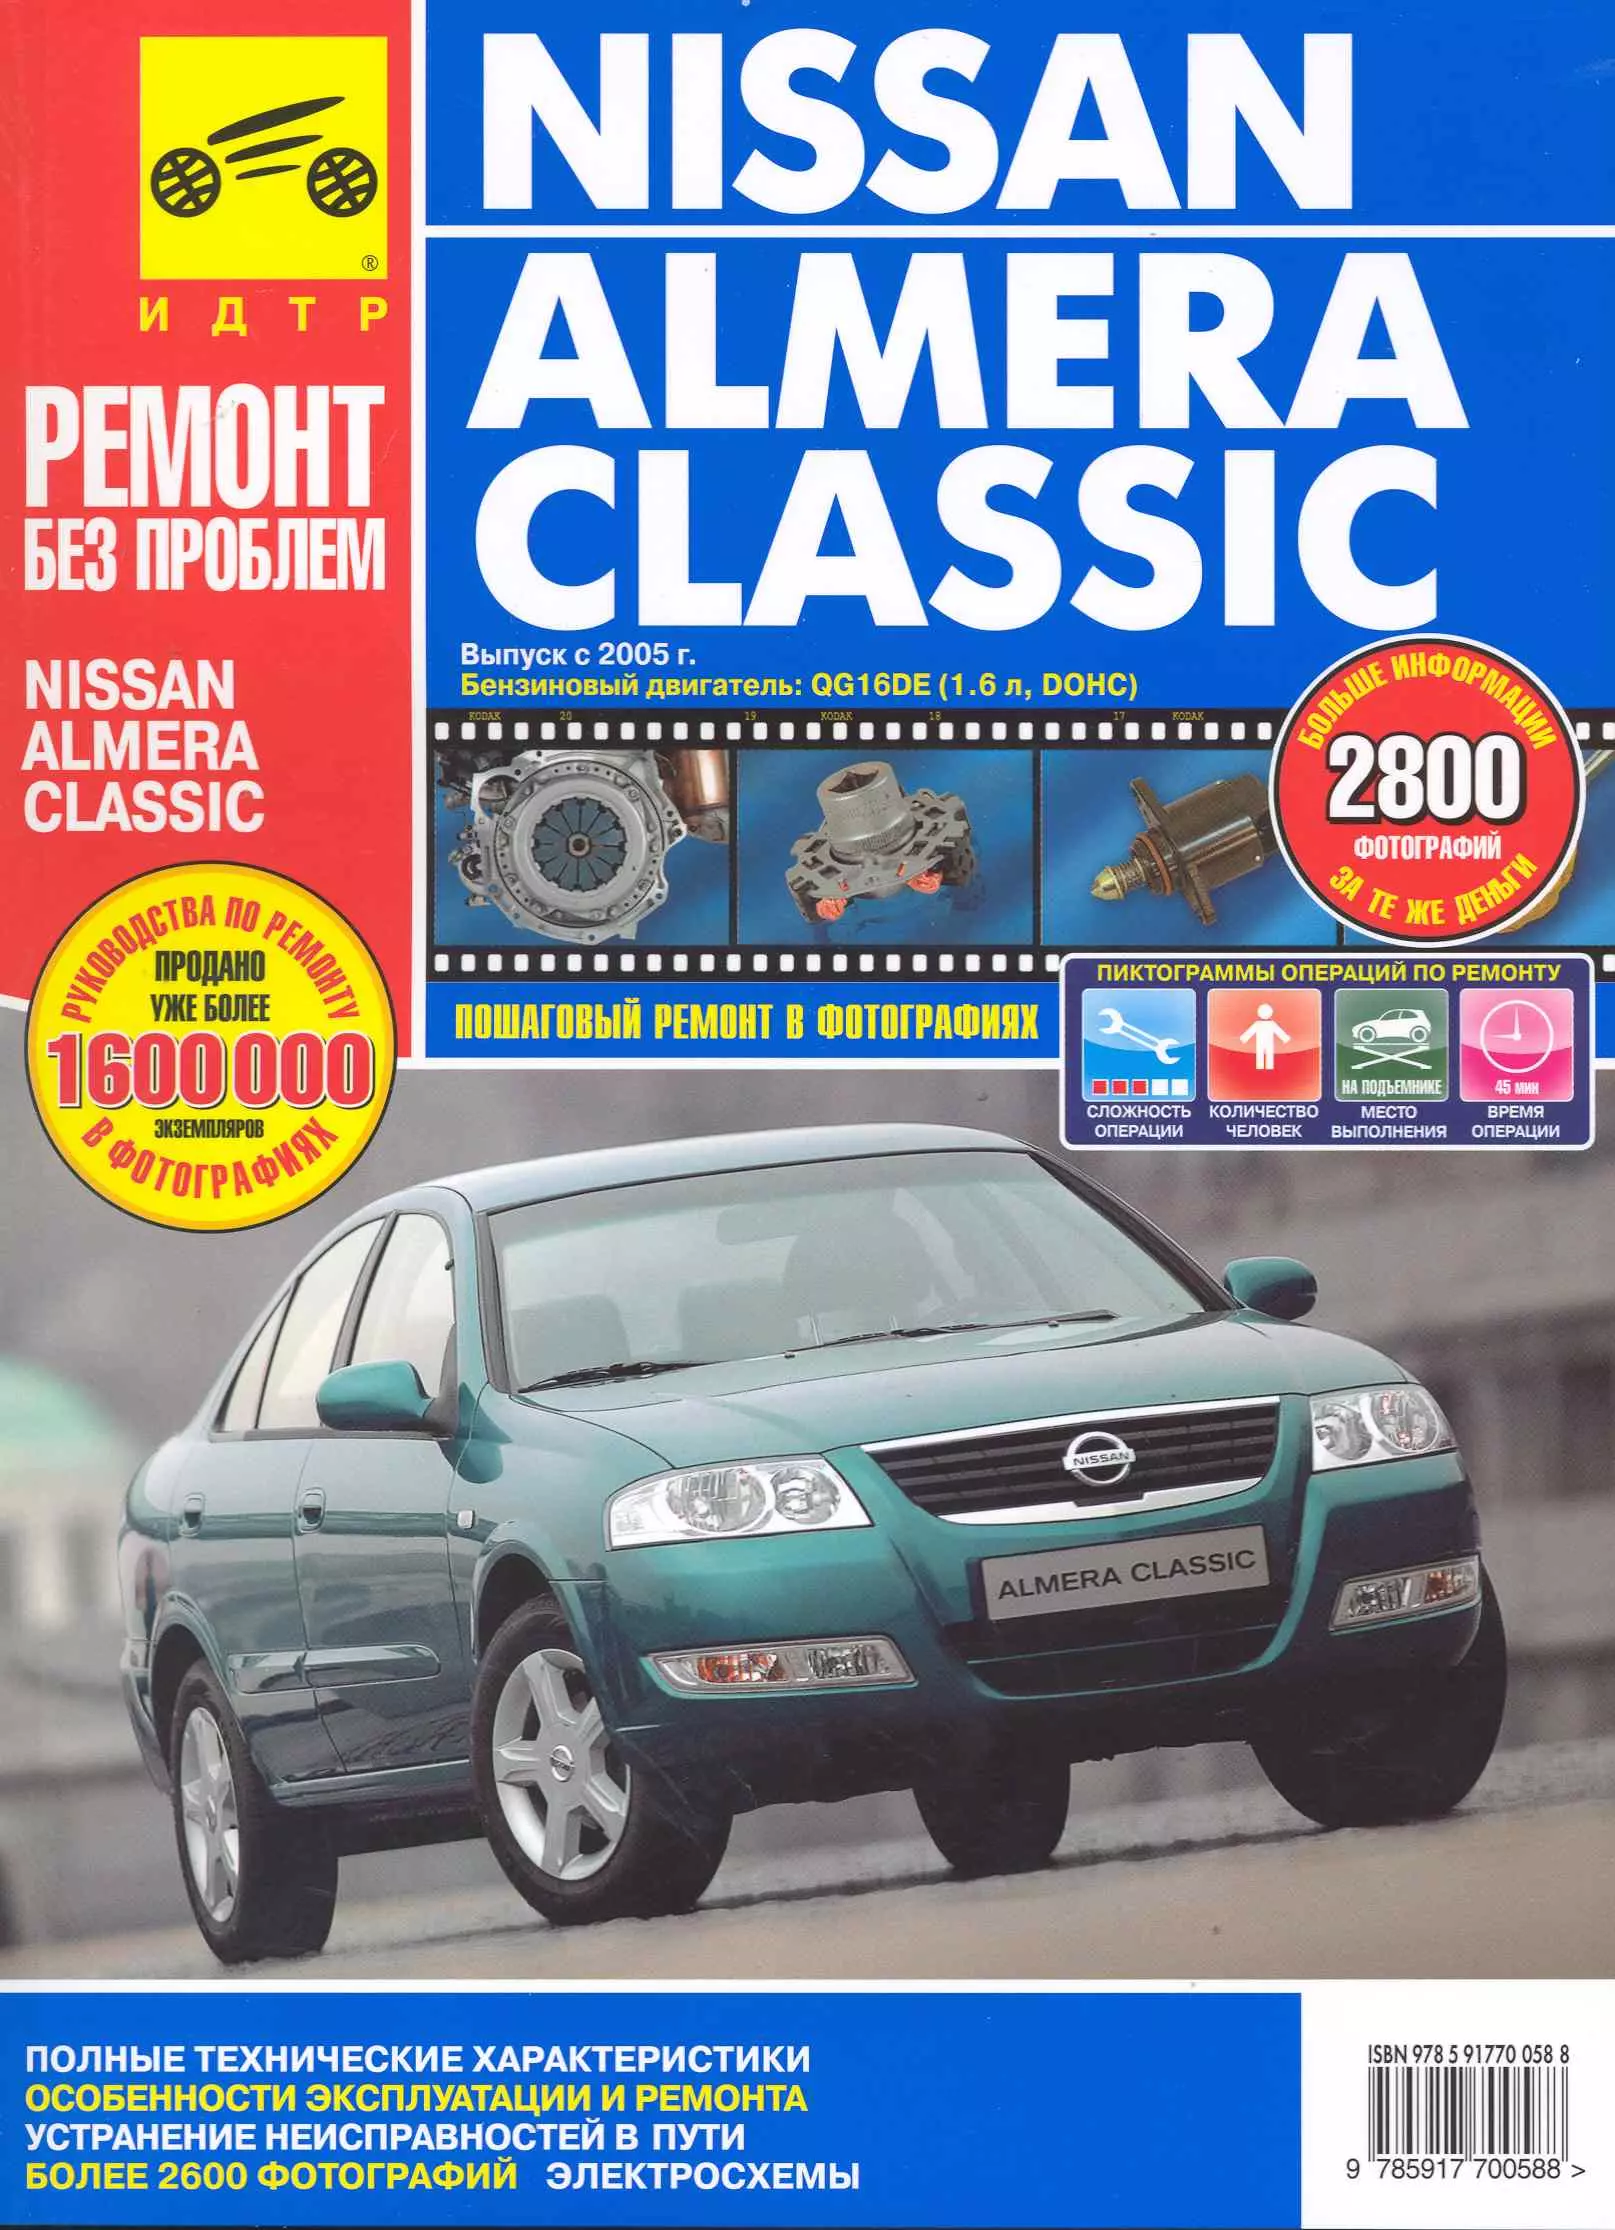  - Nissan Almera Classic с 2005 г. бенз. дв. 1.6 цв. фото рук. по рем.//с 2005 г.//